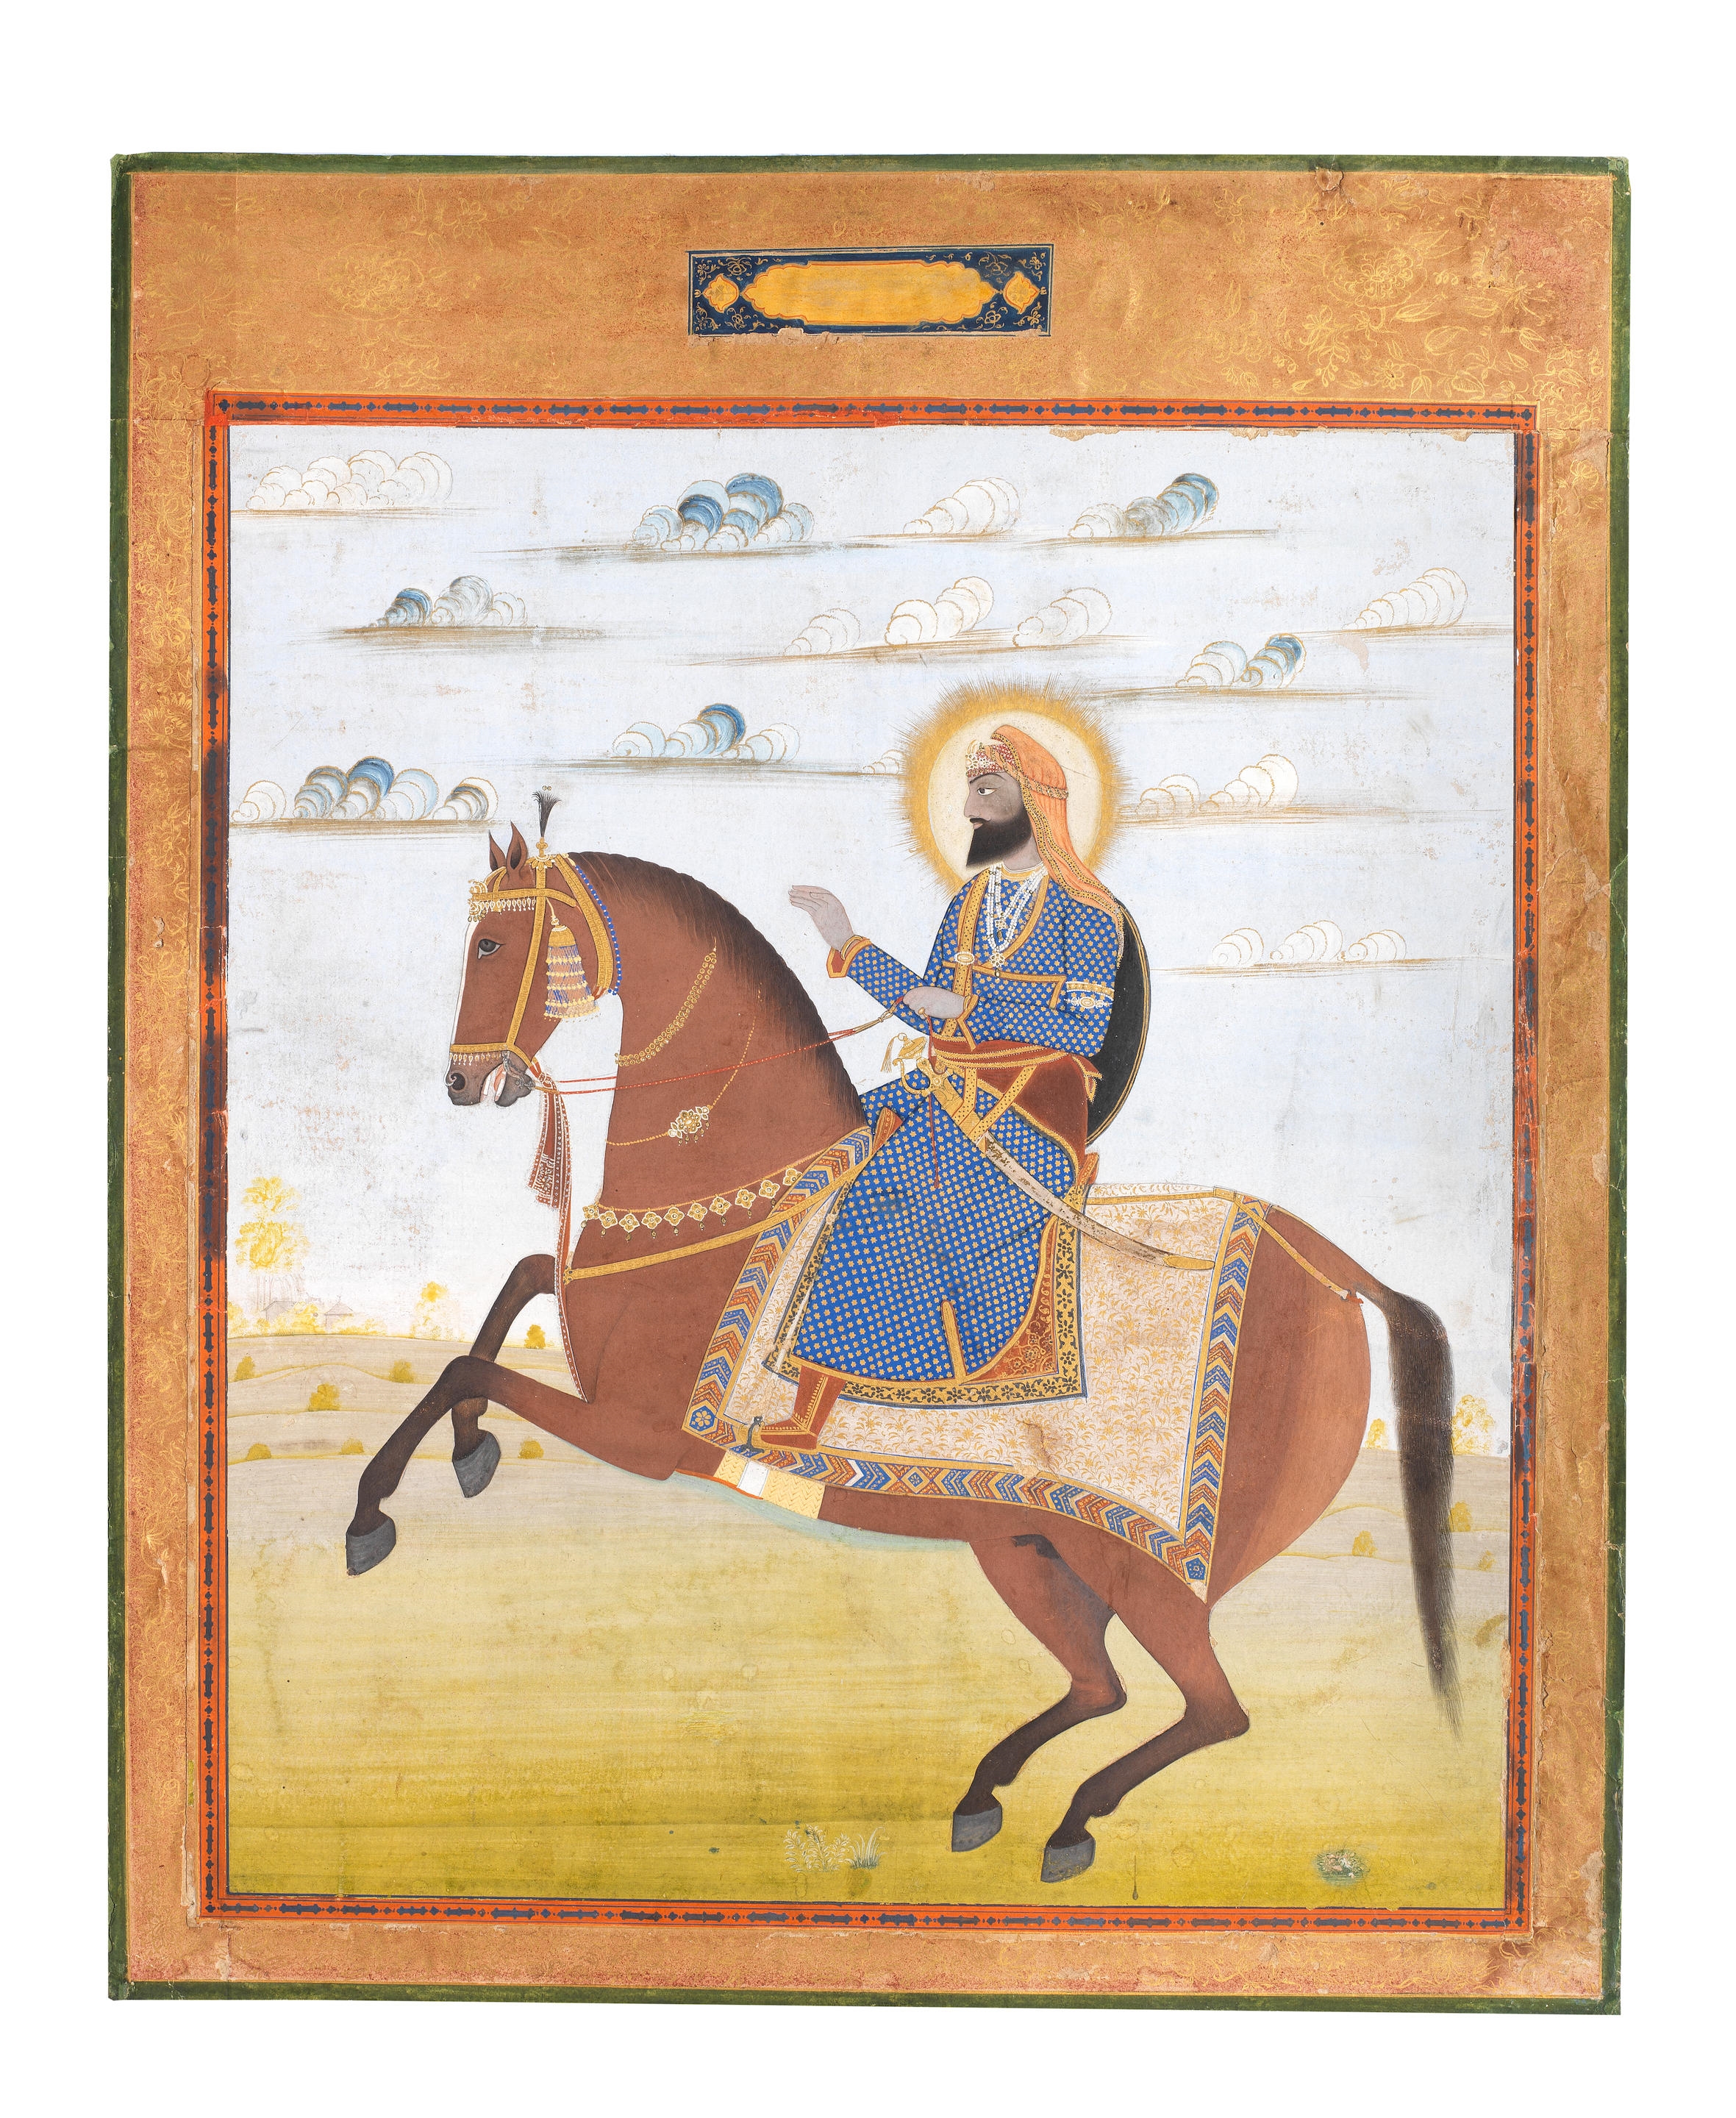 Maharajah Narinder Singh of Patiala (reg. 1845-62) on horseback by Punjab School, 19th Century, circa 1850-55